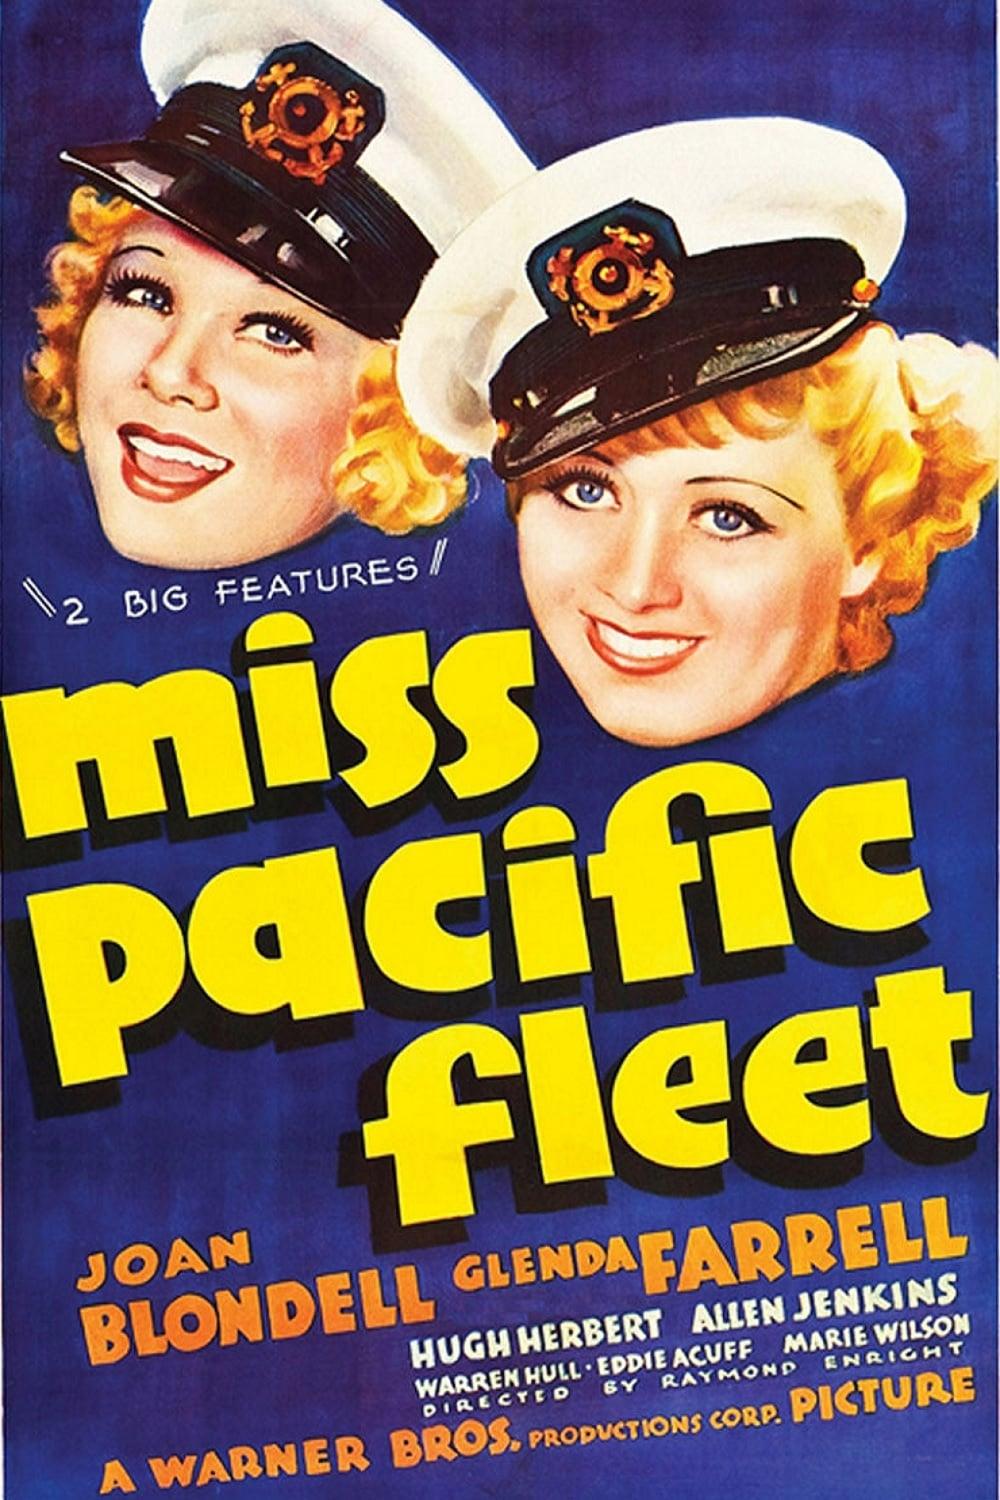 Miss Pacific Fleet poster